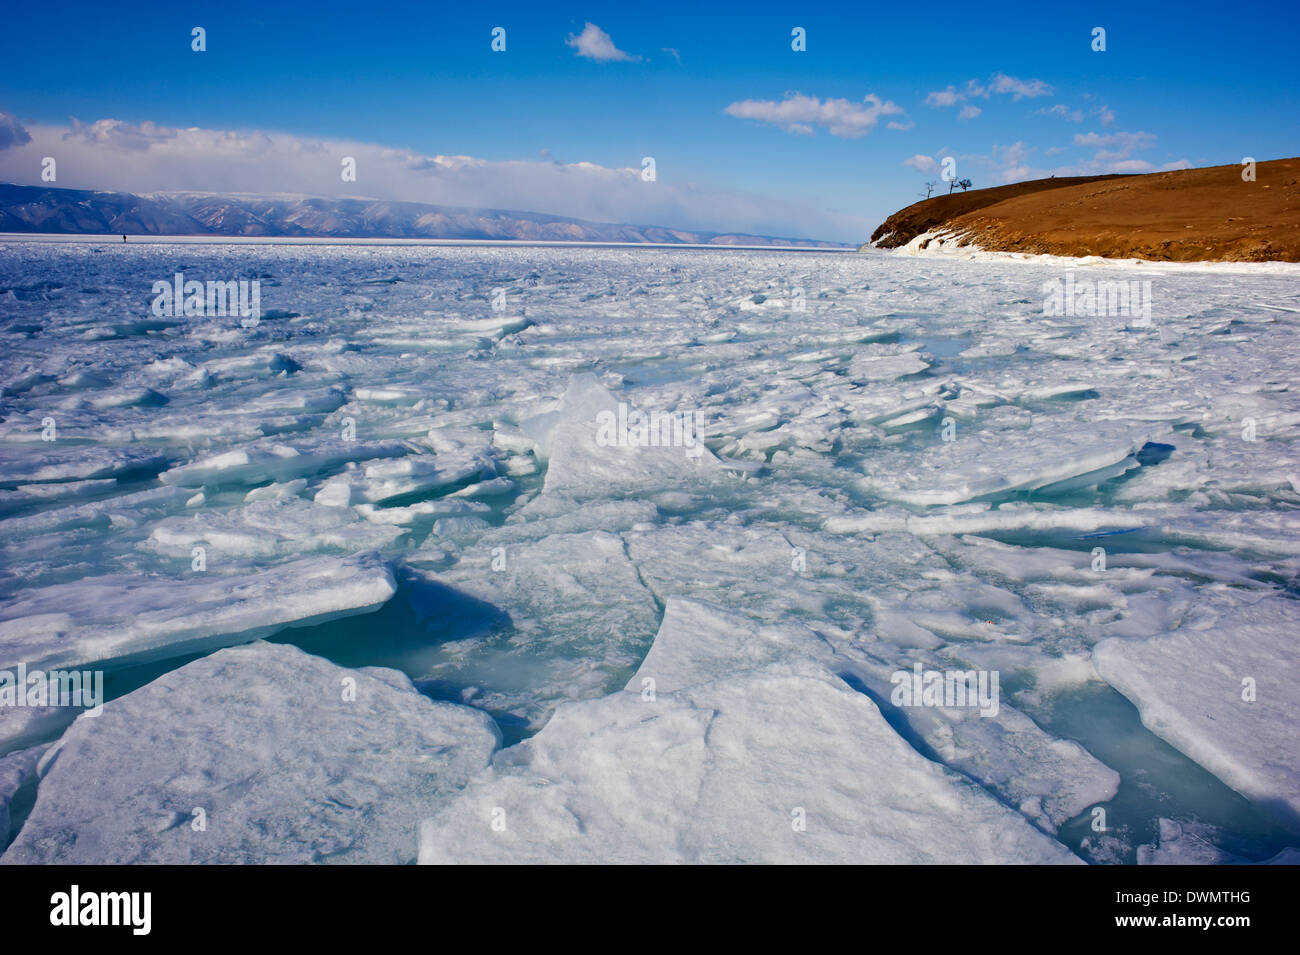 Maloe More (Little Sea), frozen lake during winter, Olkhon island, Lake Baikal, UNESCO Site, Irkutsk Oblast, Siberia, Russia Stock Photo